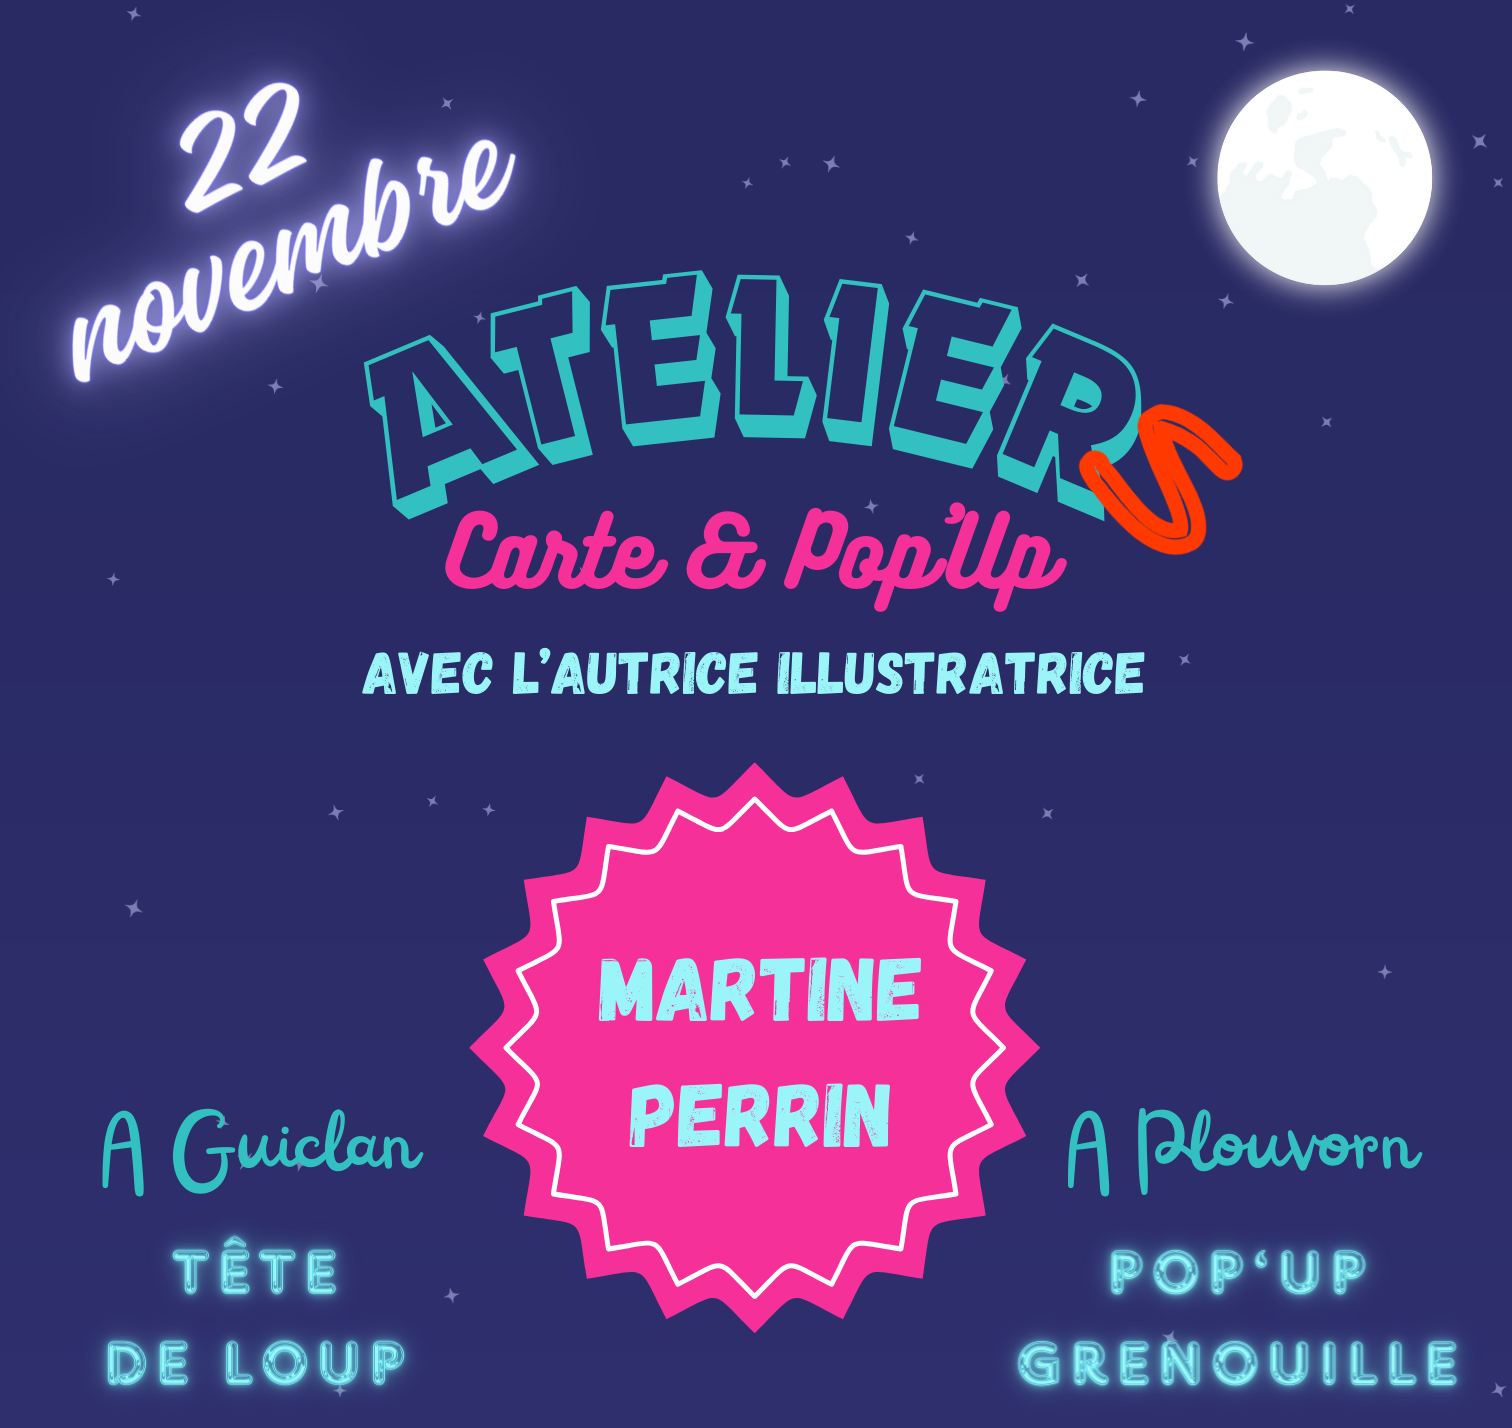 Culture CCPL - Ateliers carte et pop up - Martine Perrin - Miniature